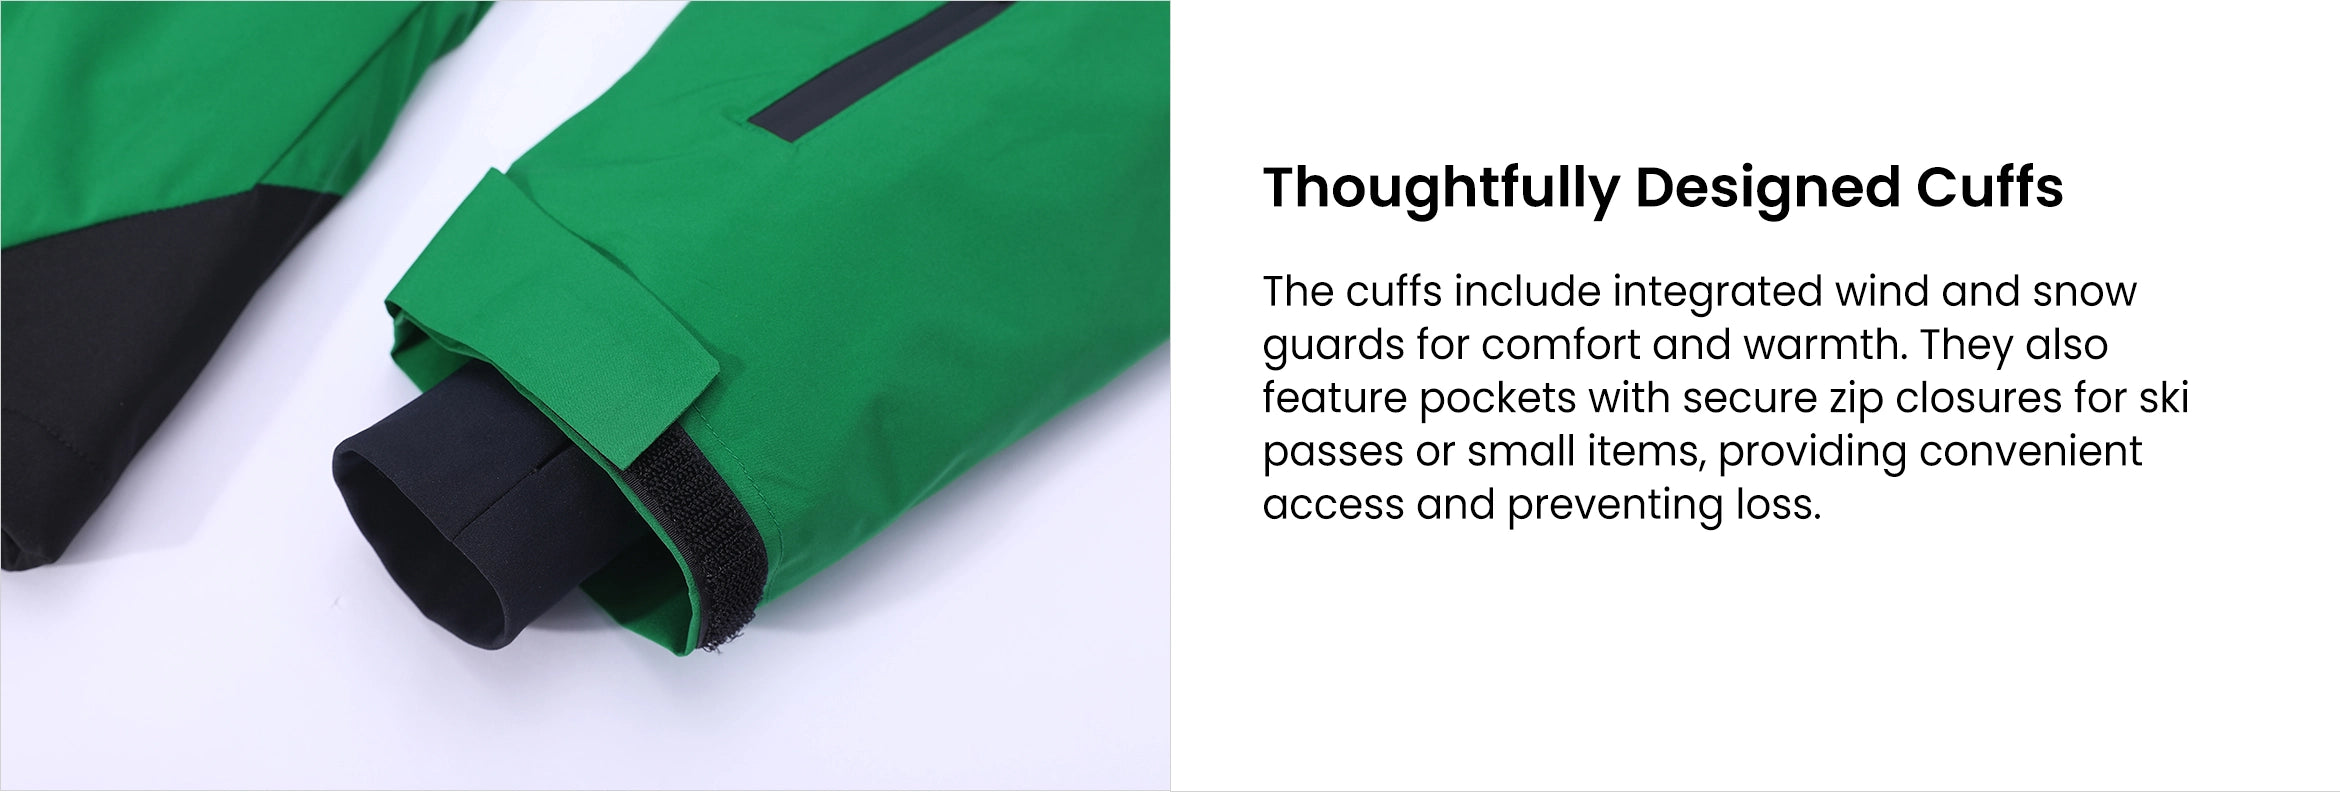 4. Thoughtfully Designed Cuffs